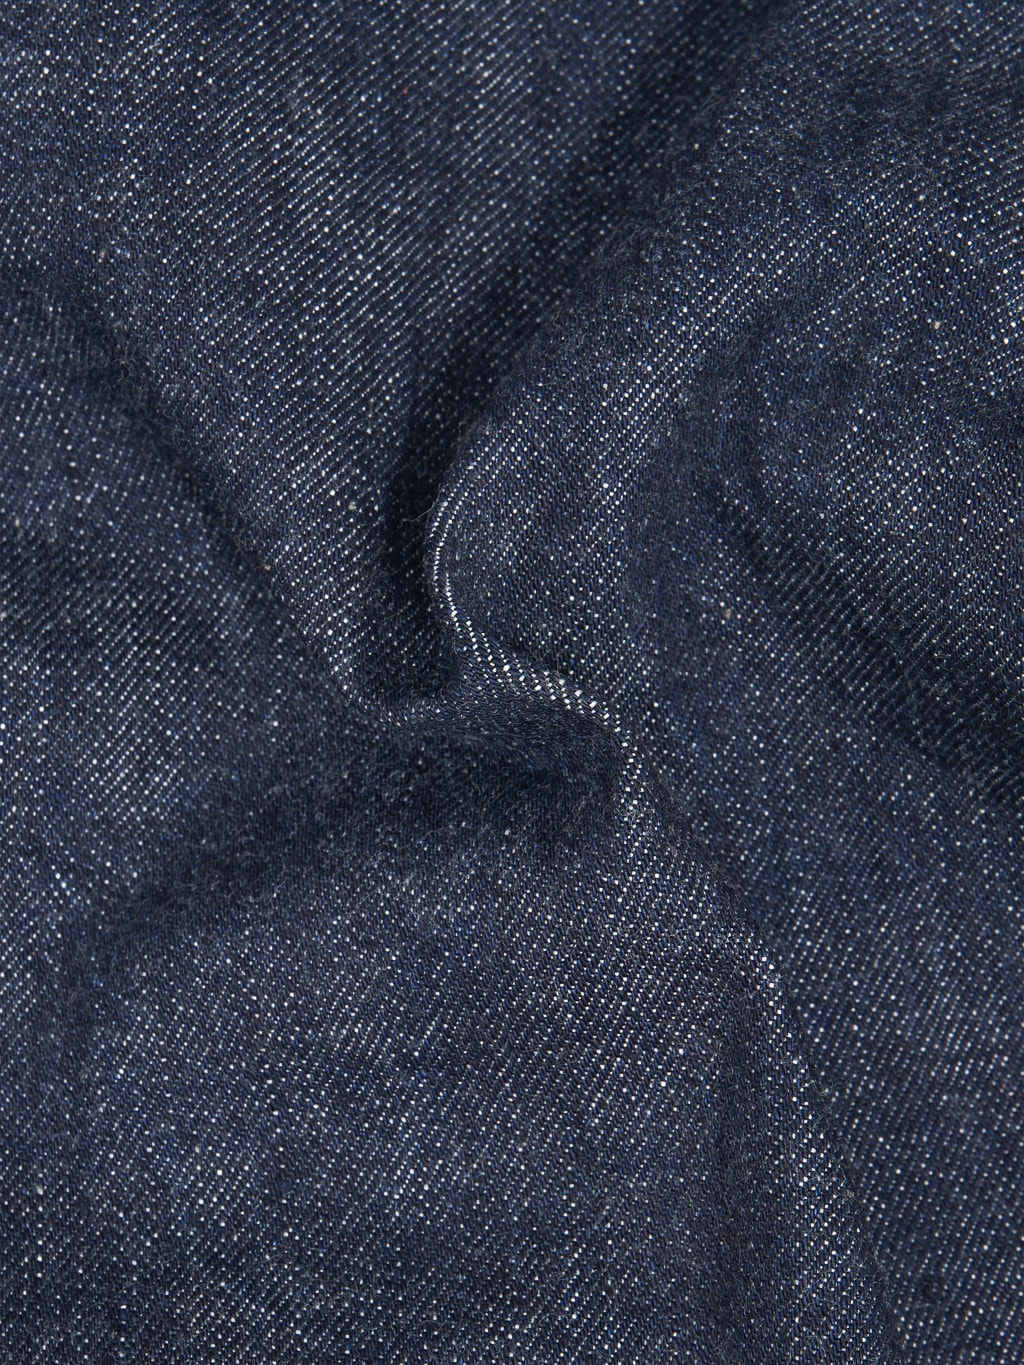 fullcount 1103 clean straight selvedge denim jeans texture